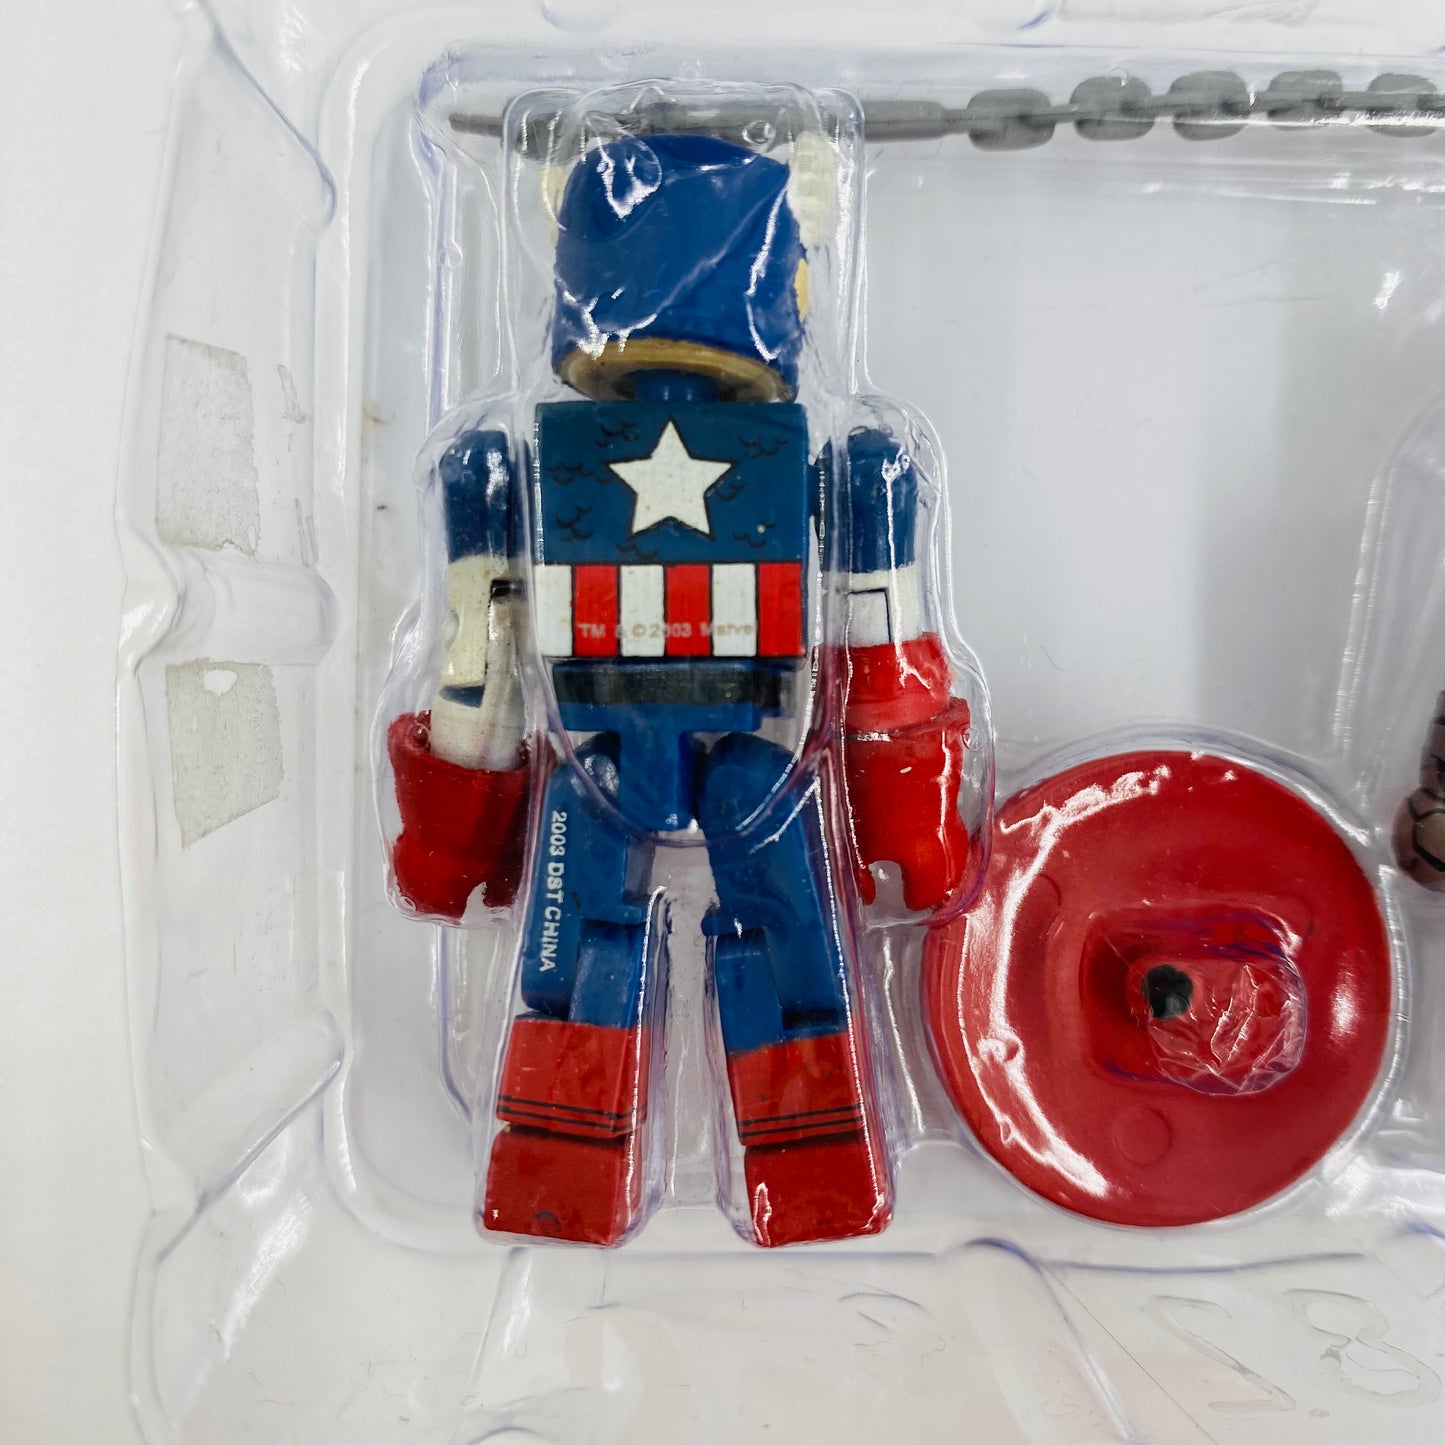 Minimates Marvel Universe wave 5 Captain America & Absorbing Man boxed/opened/complete 2" action figures (2003) Diamond Select Toys & Art Asylum